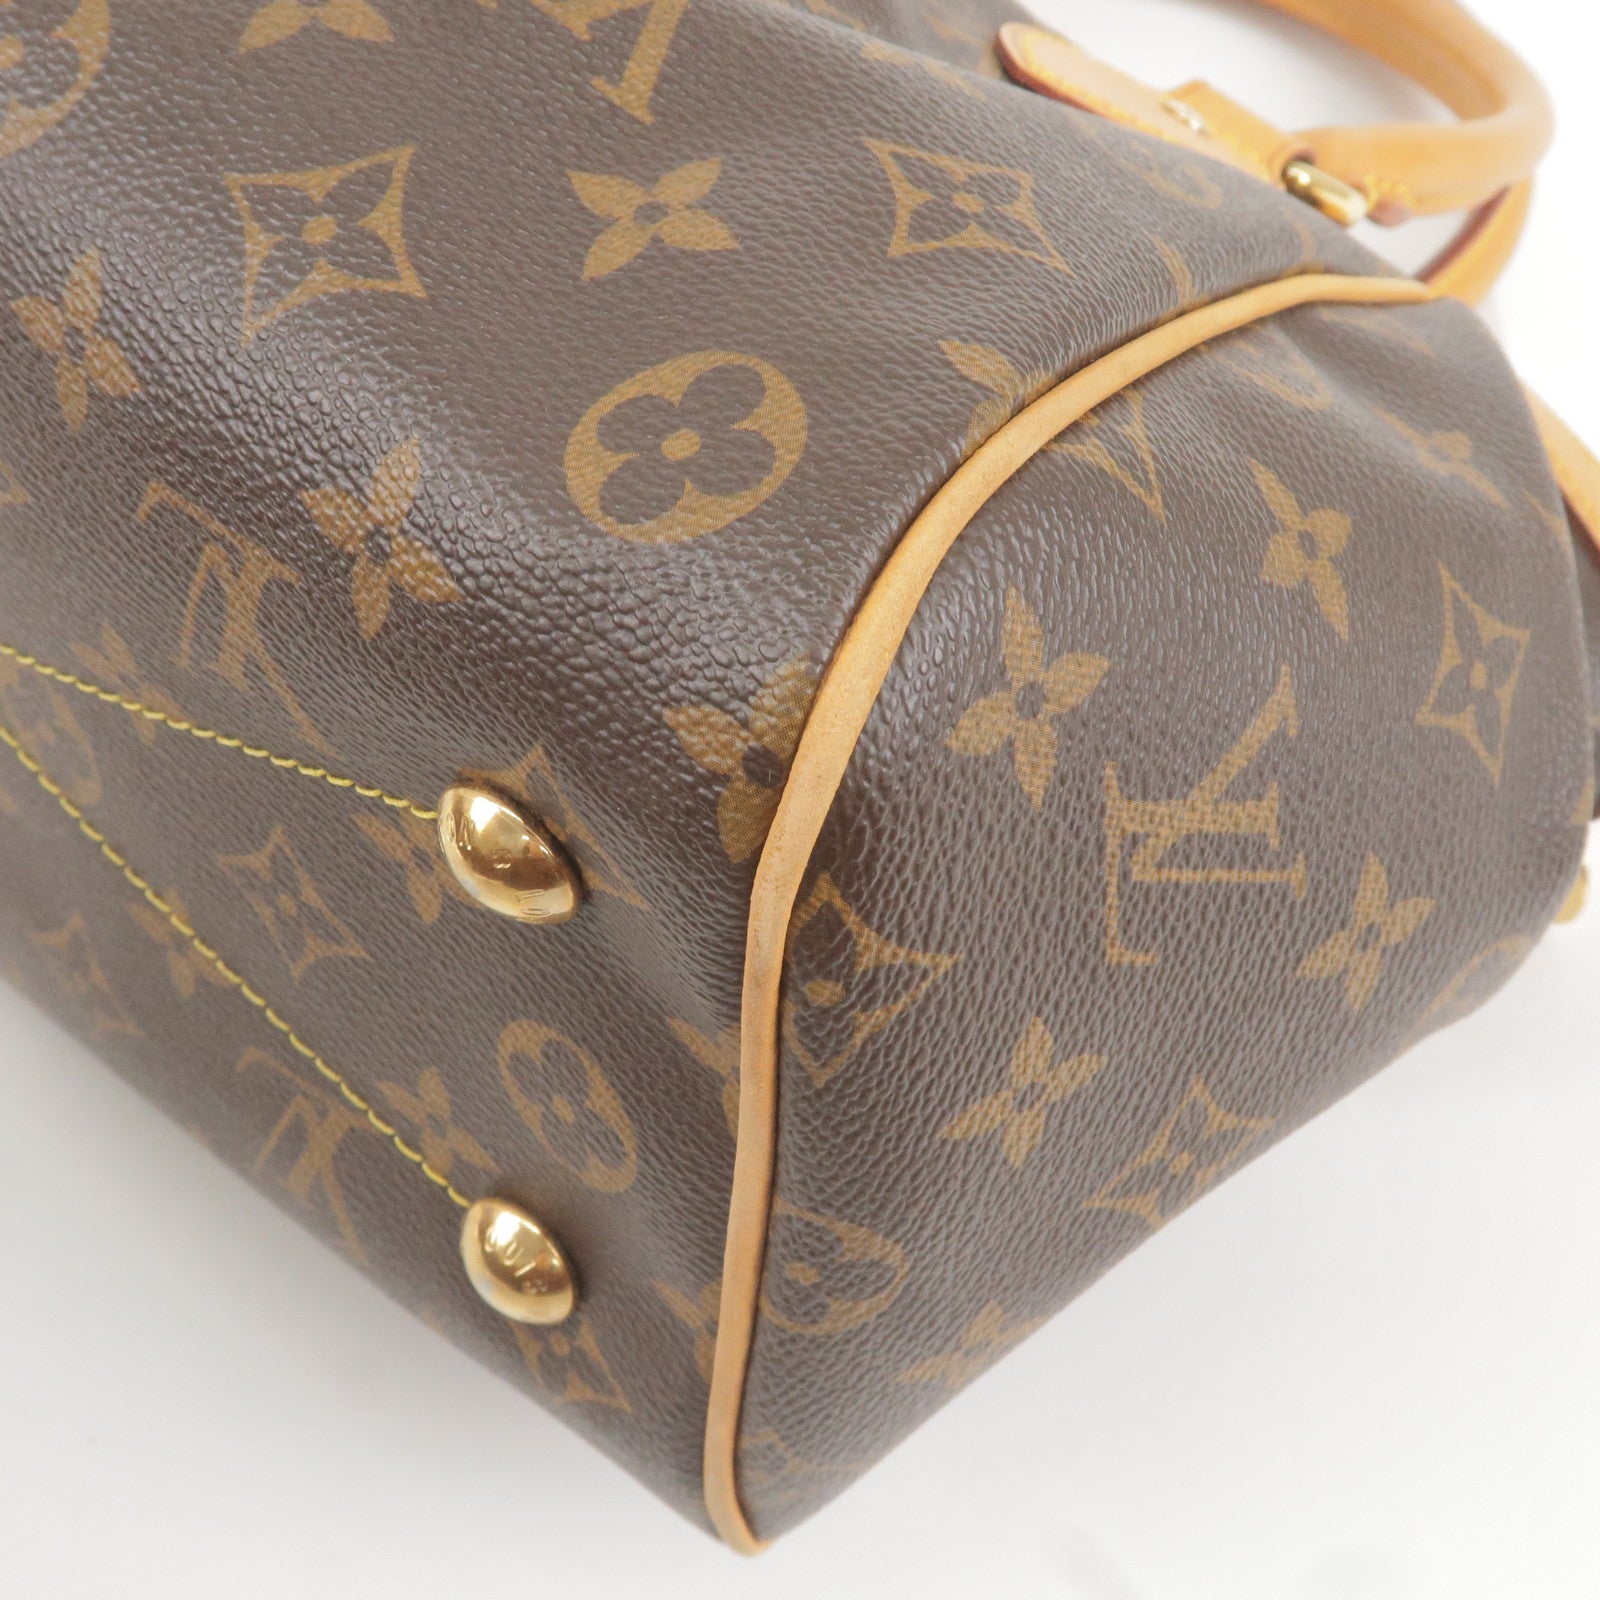 Louis Vuitton 2013 pre-owned Tivoli PM top-handle bag